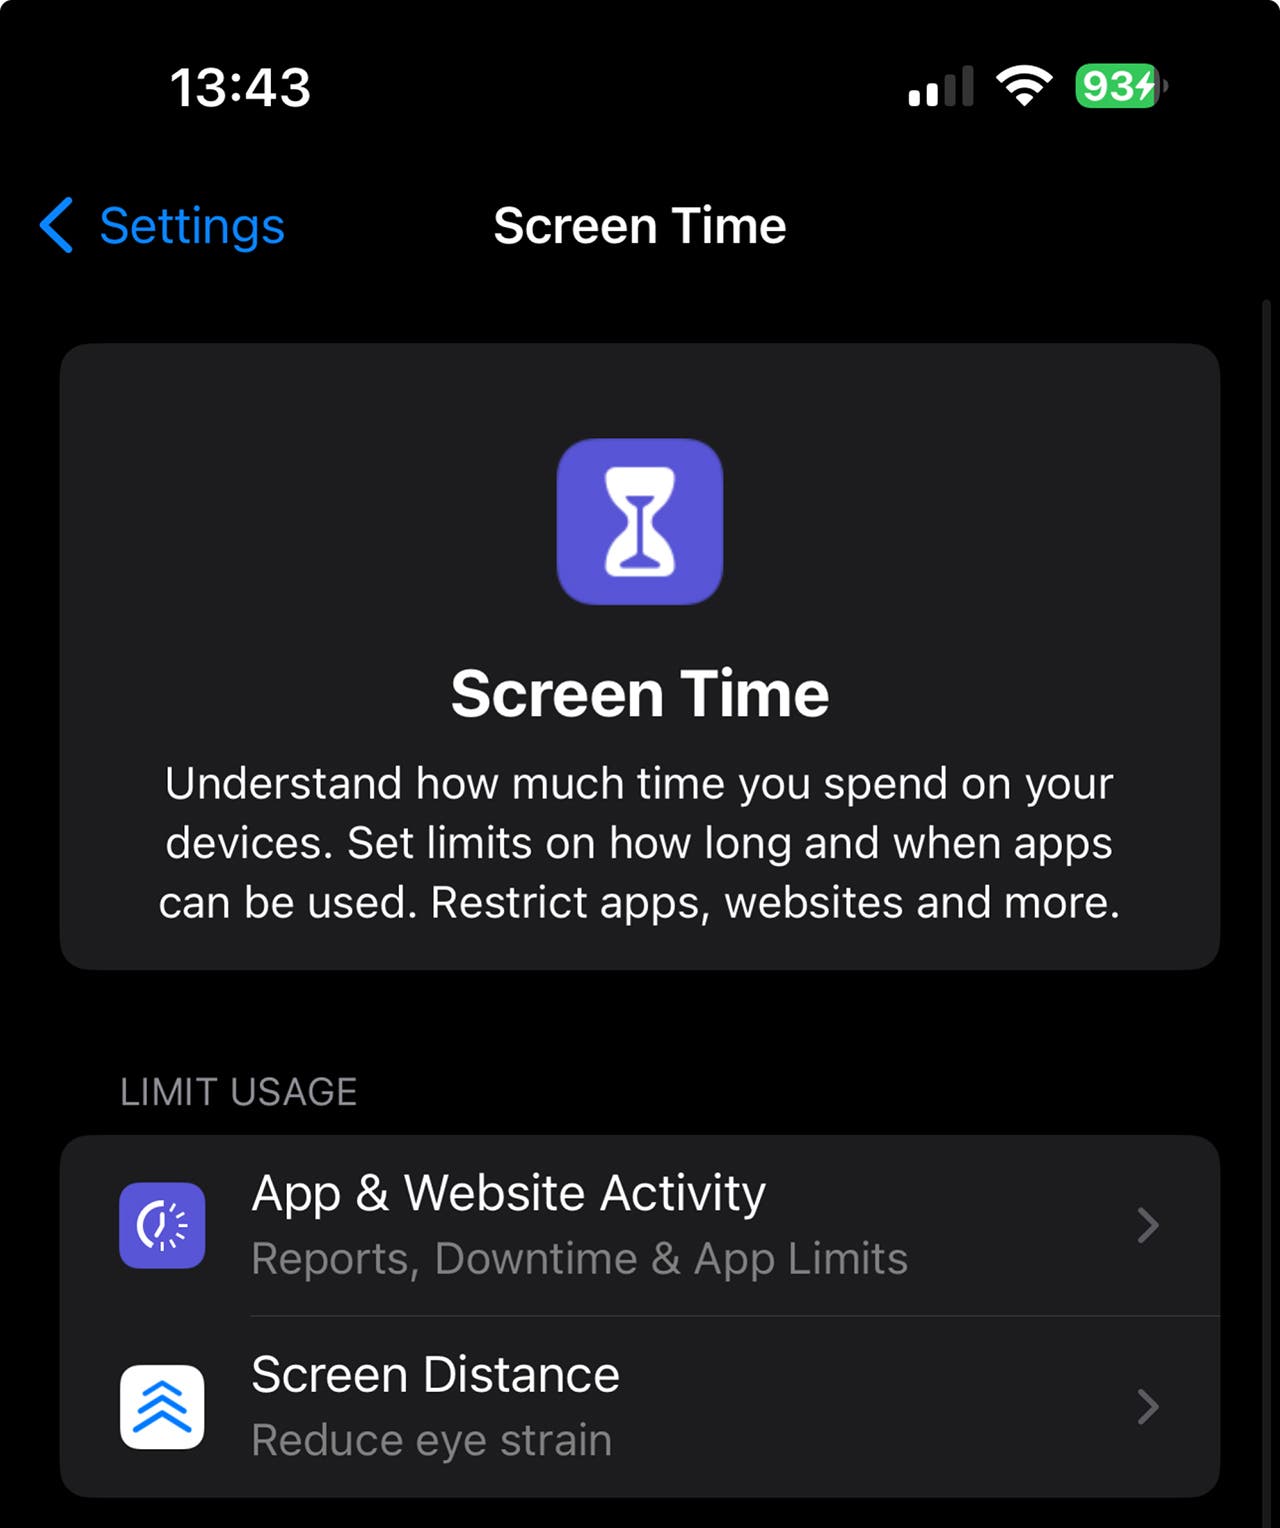 Enabling Screen Distance On iOS 17